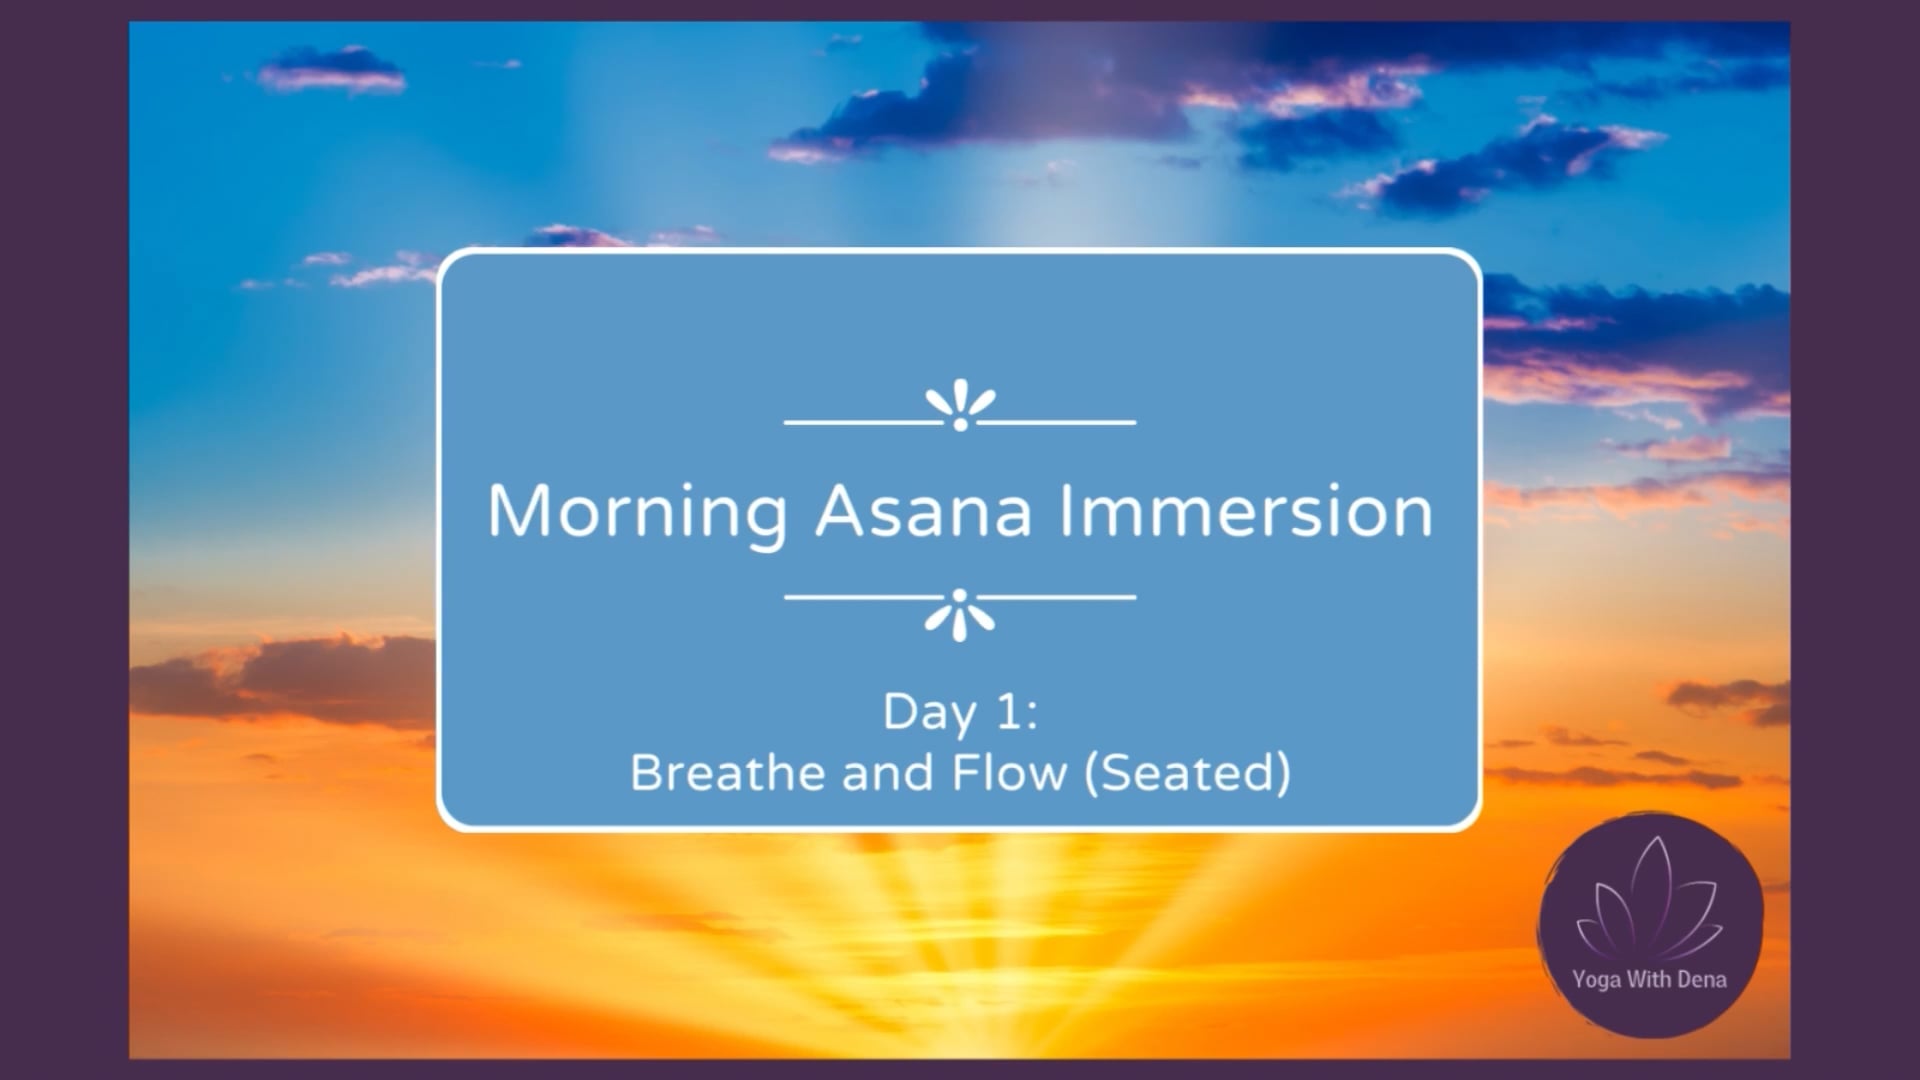 Day 1 - Morning Asana Immersion